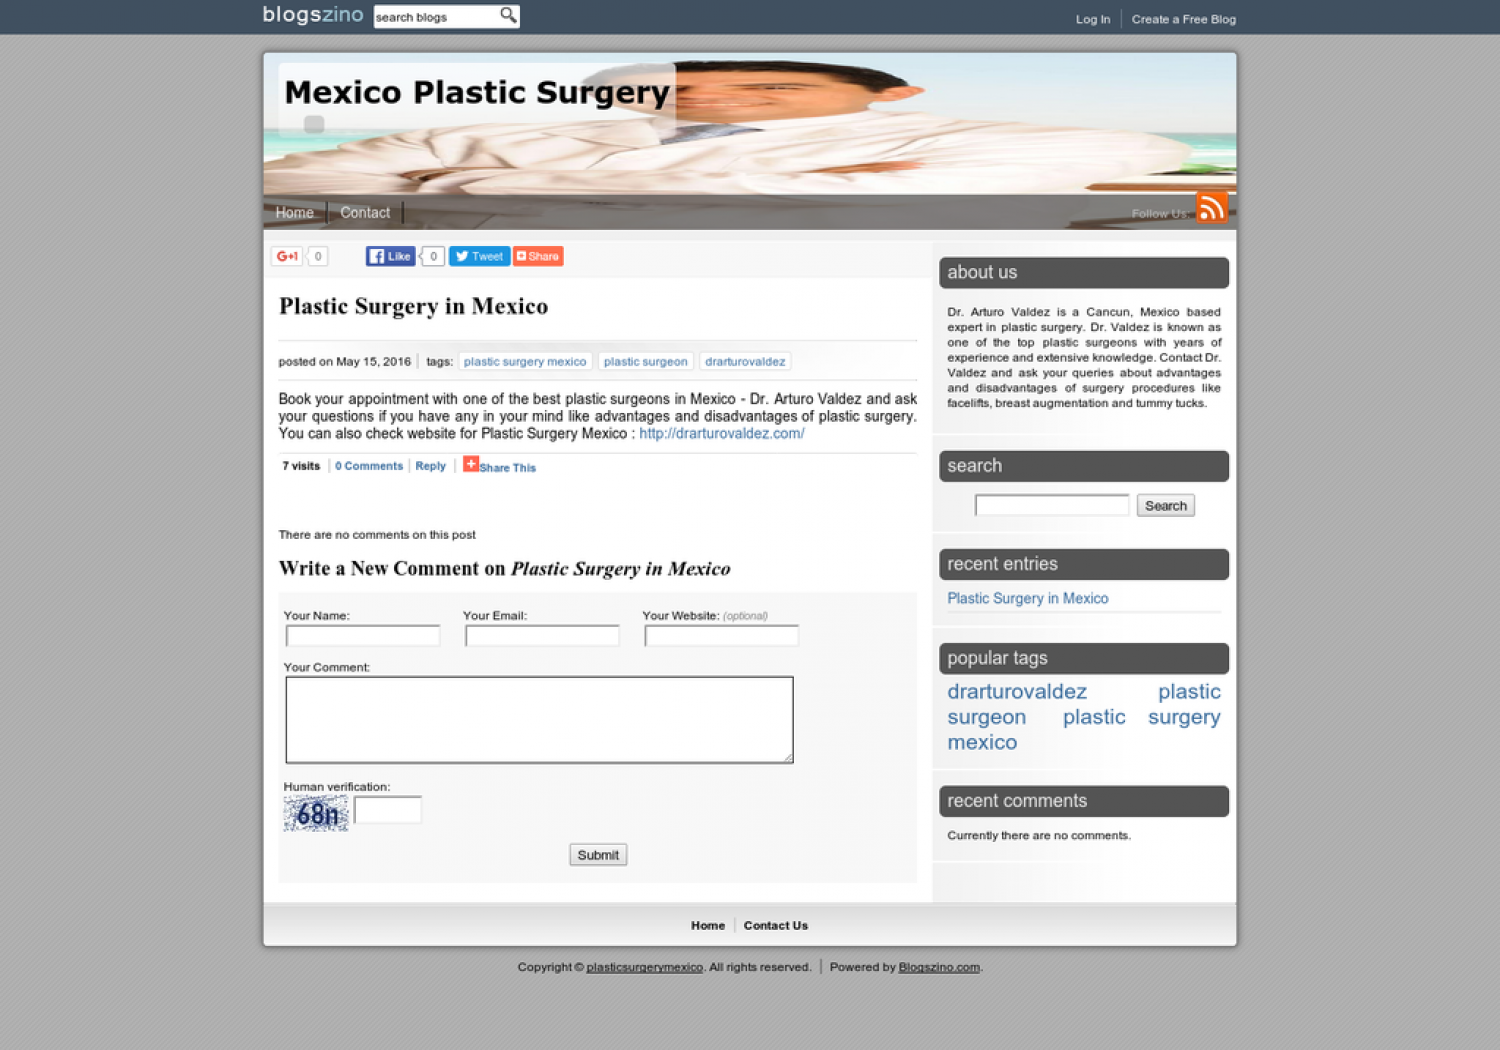 Mexico's Plastic Surgery Infographic